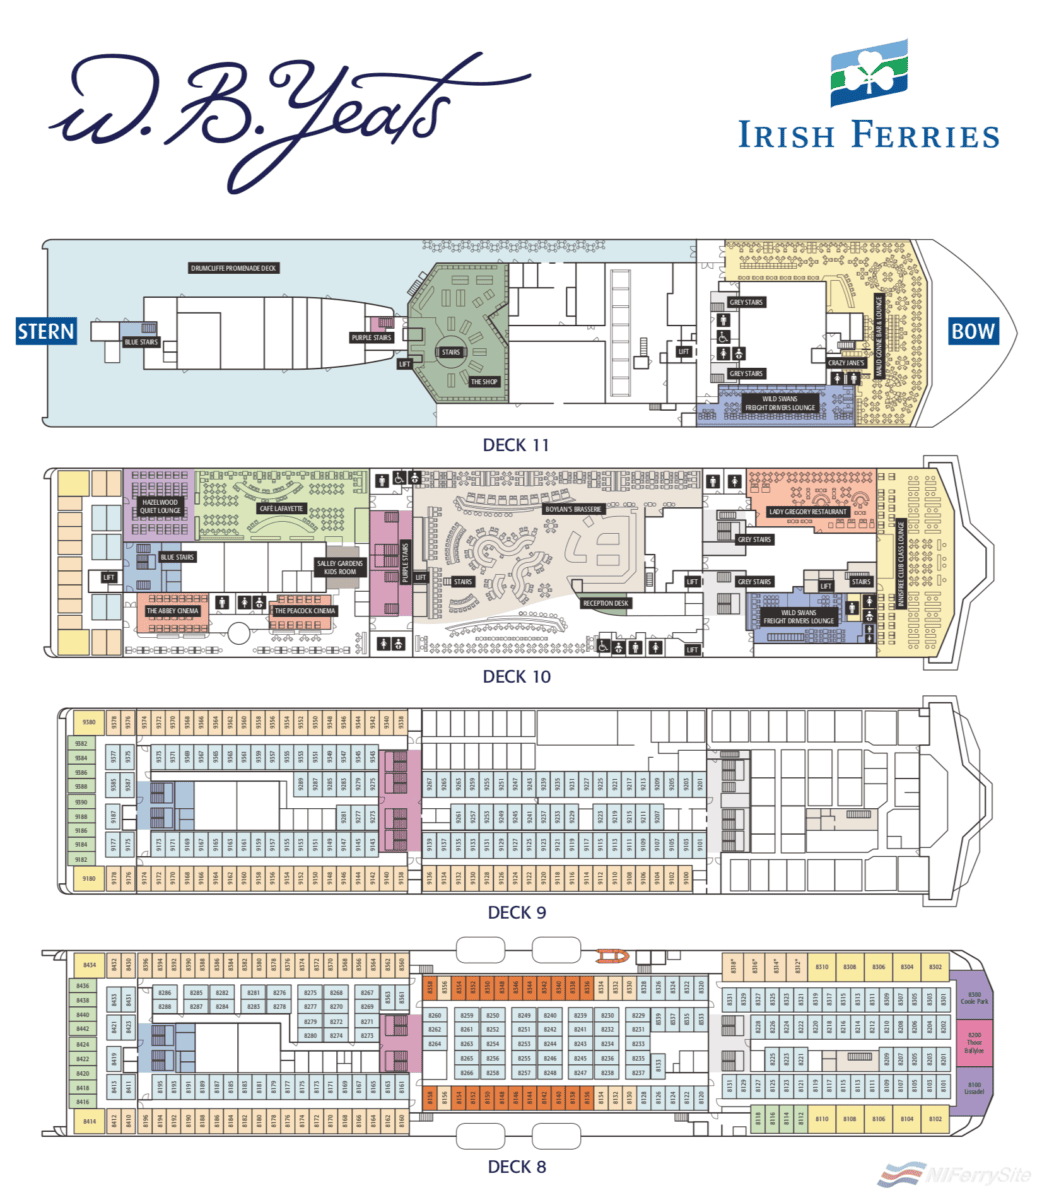 Official Irish Ferries deck plan for W. B. YEATS, 2019. © Irish Ferries.